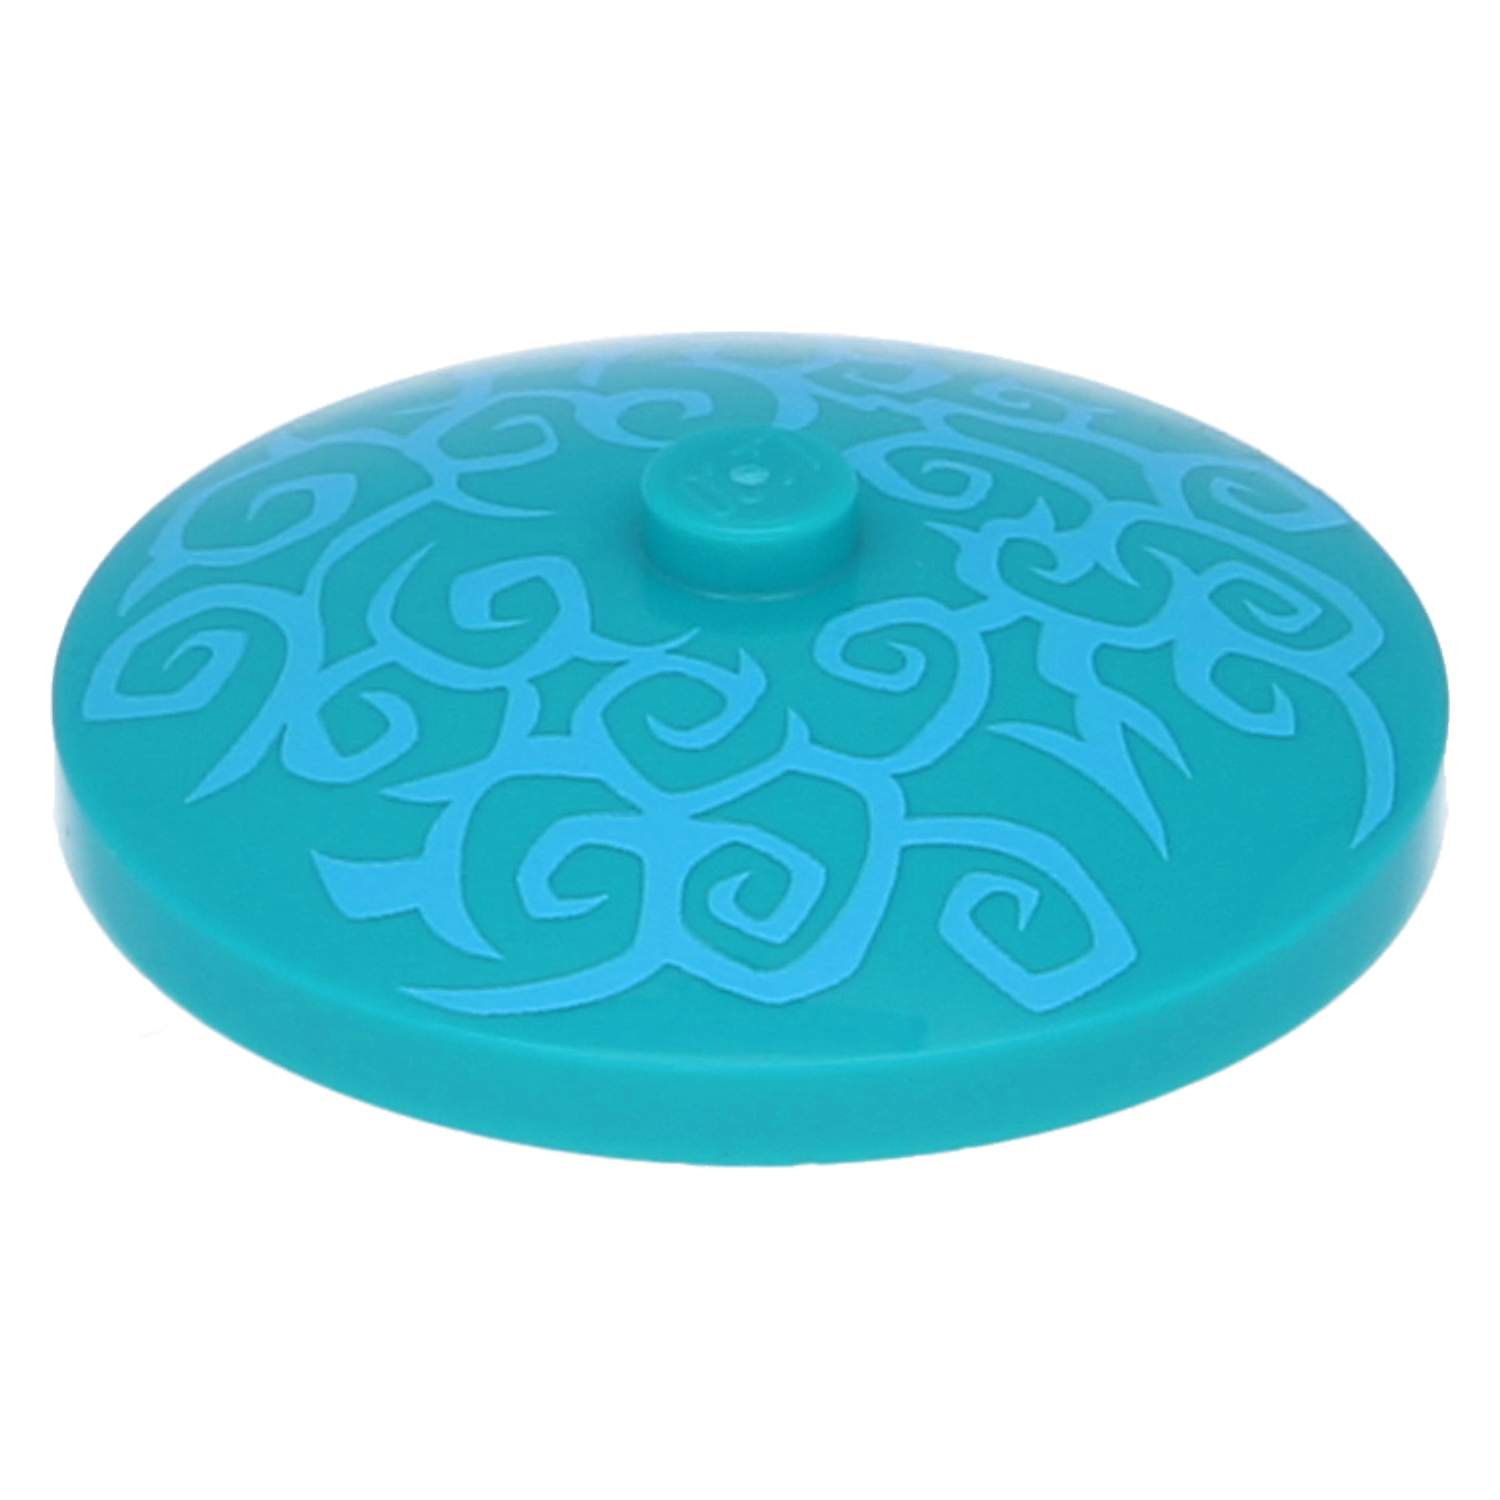 LEGO satellite bowl/ radar - 4 x 4 with sand blue swirl (inverted)